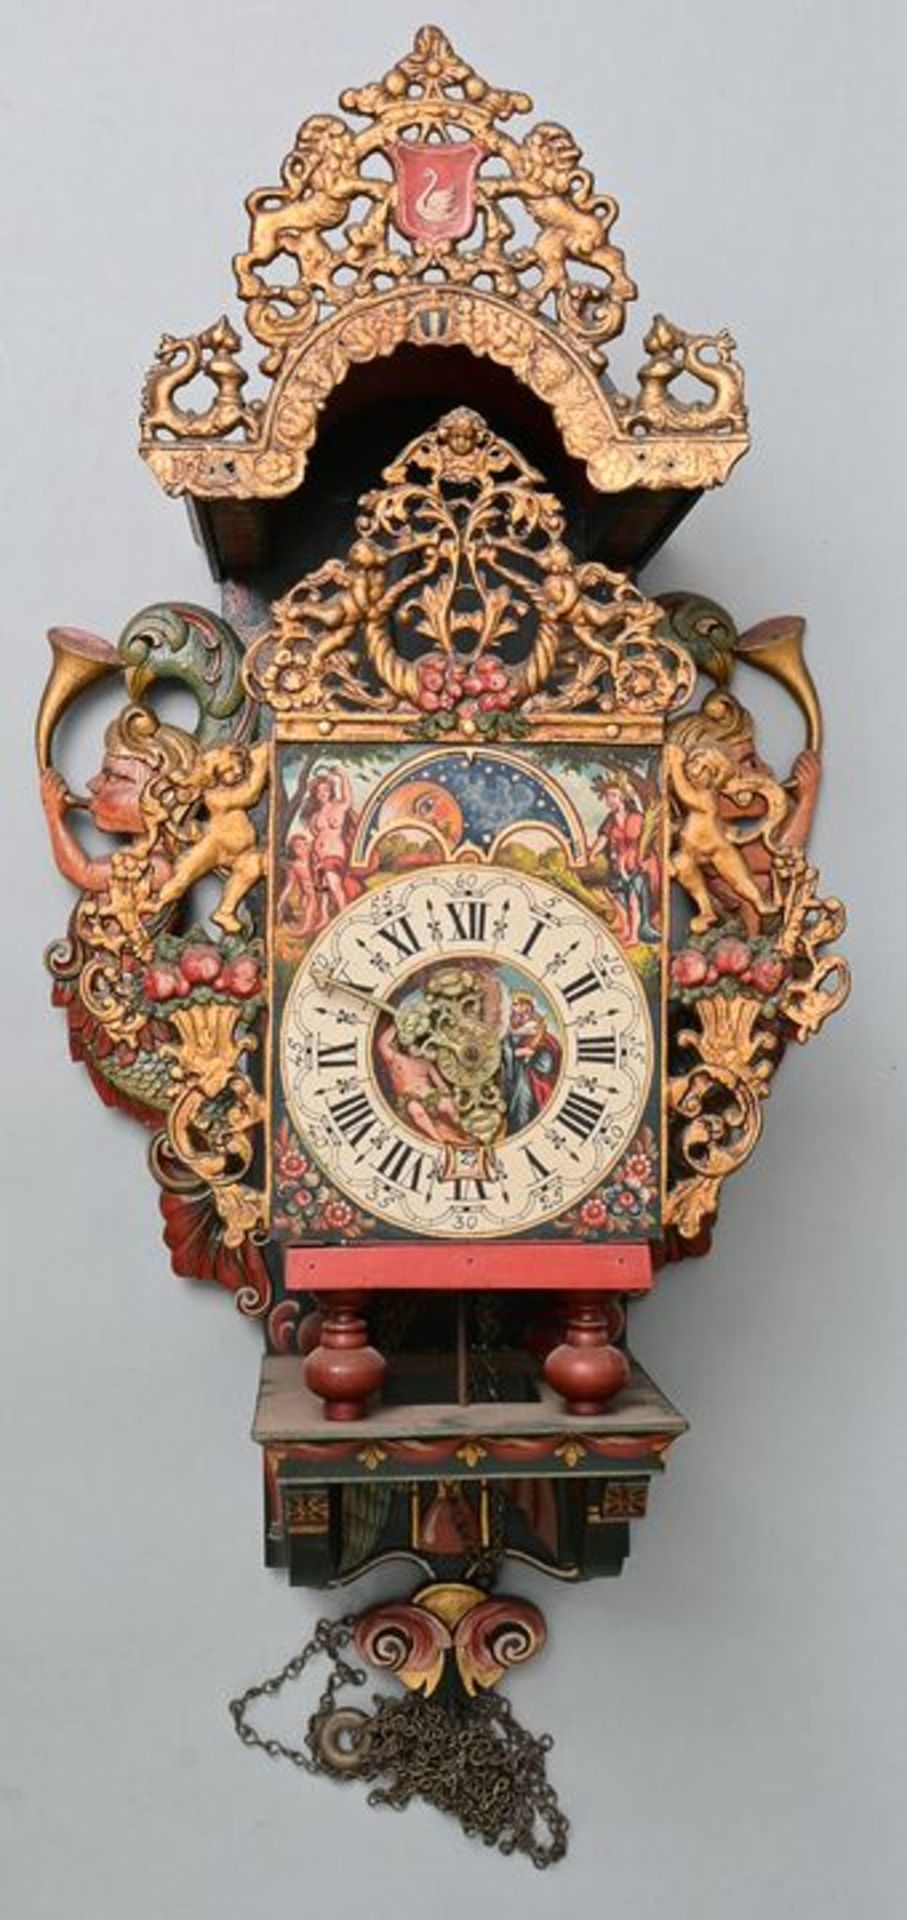 Stuhluhr/ wall clock